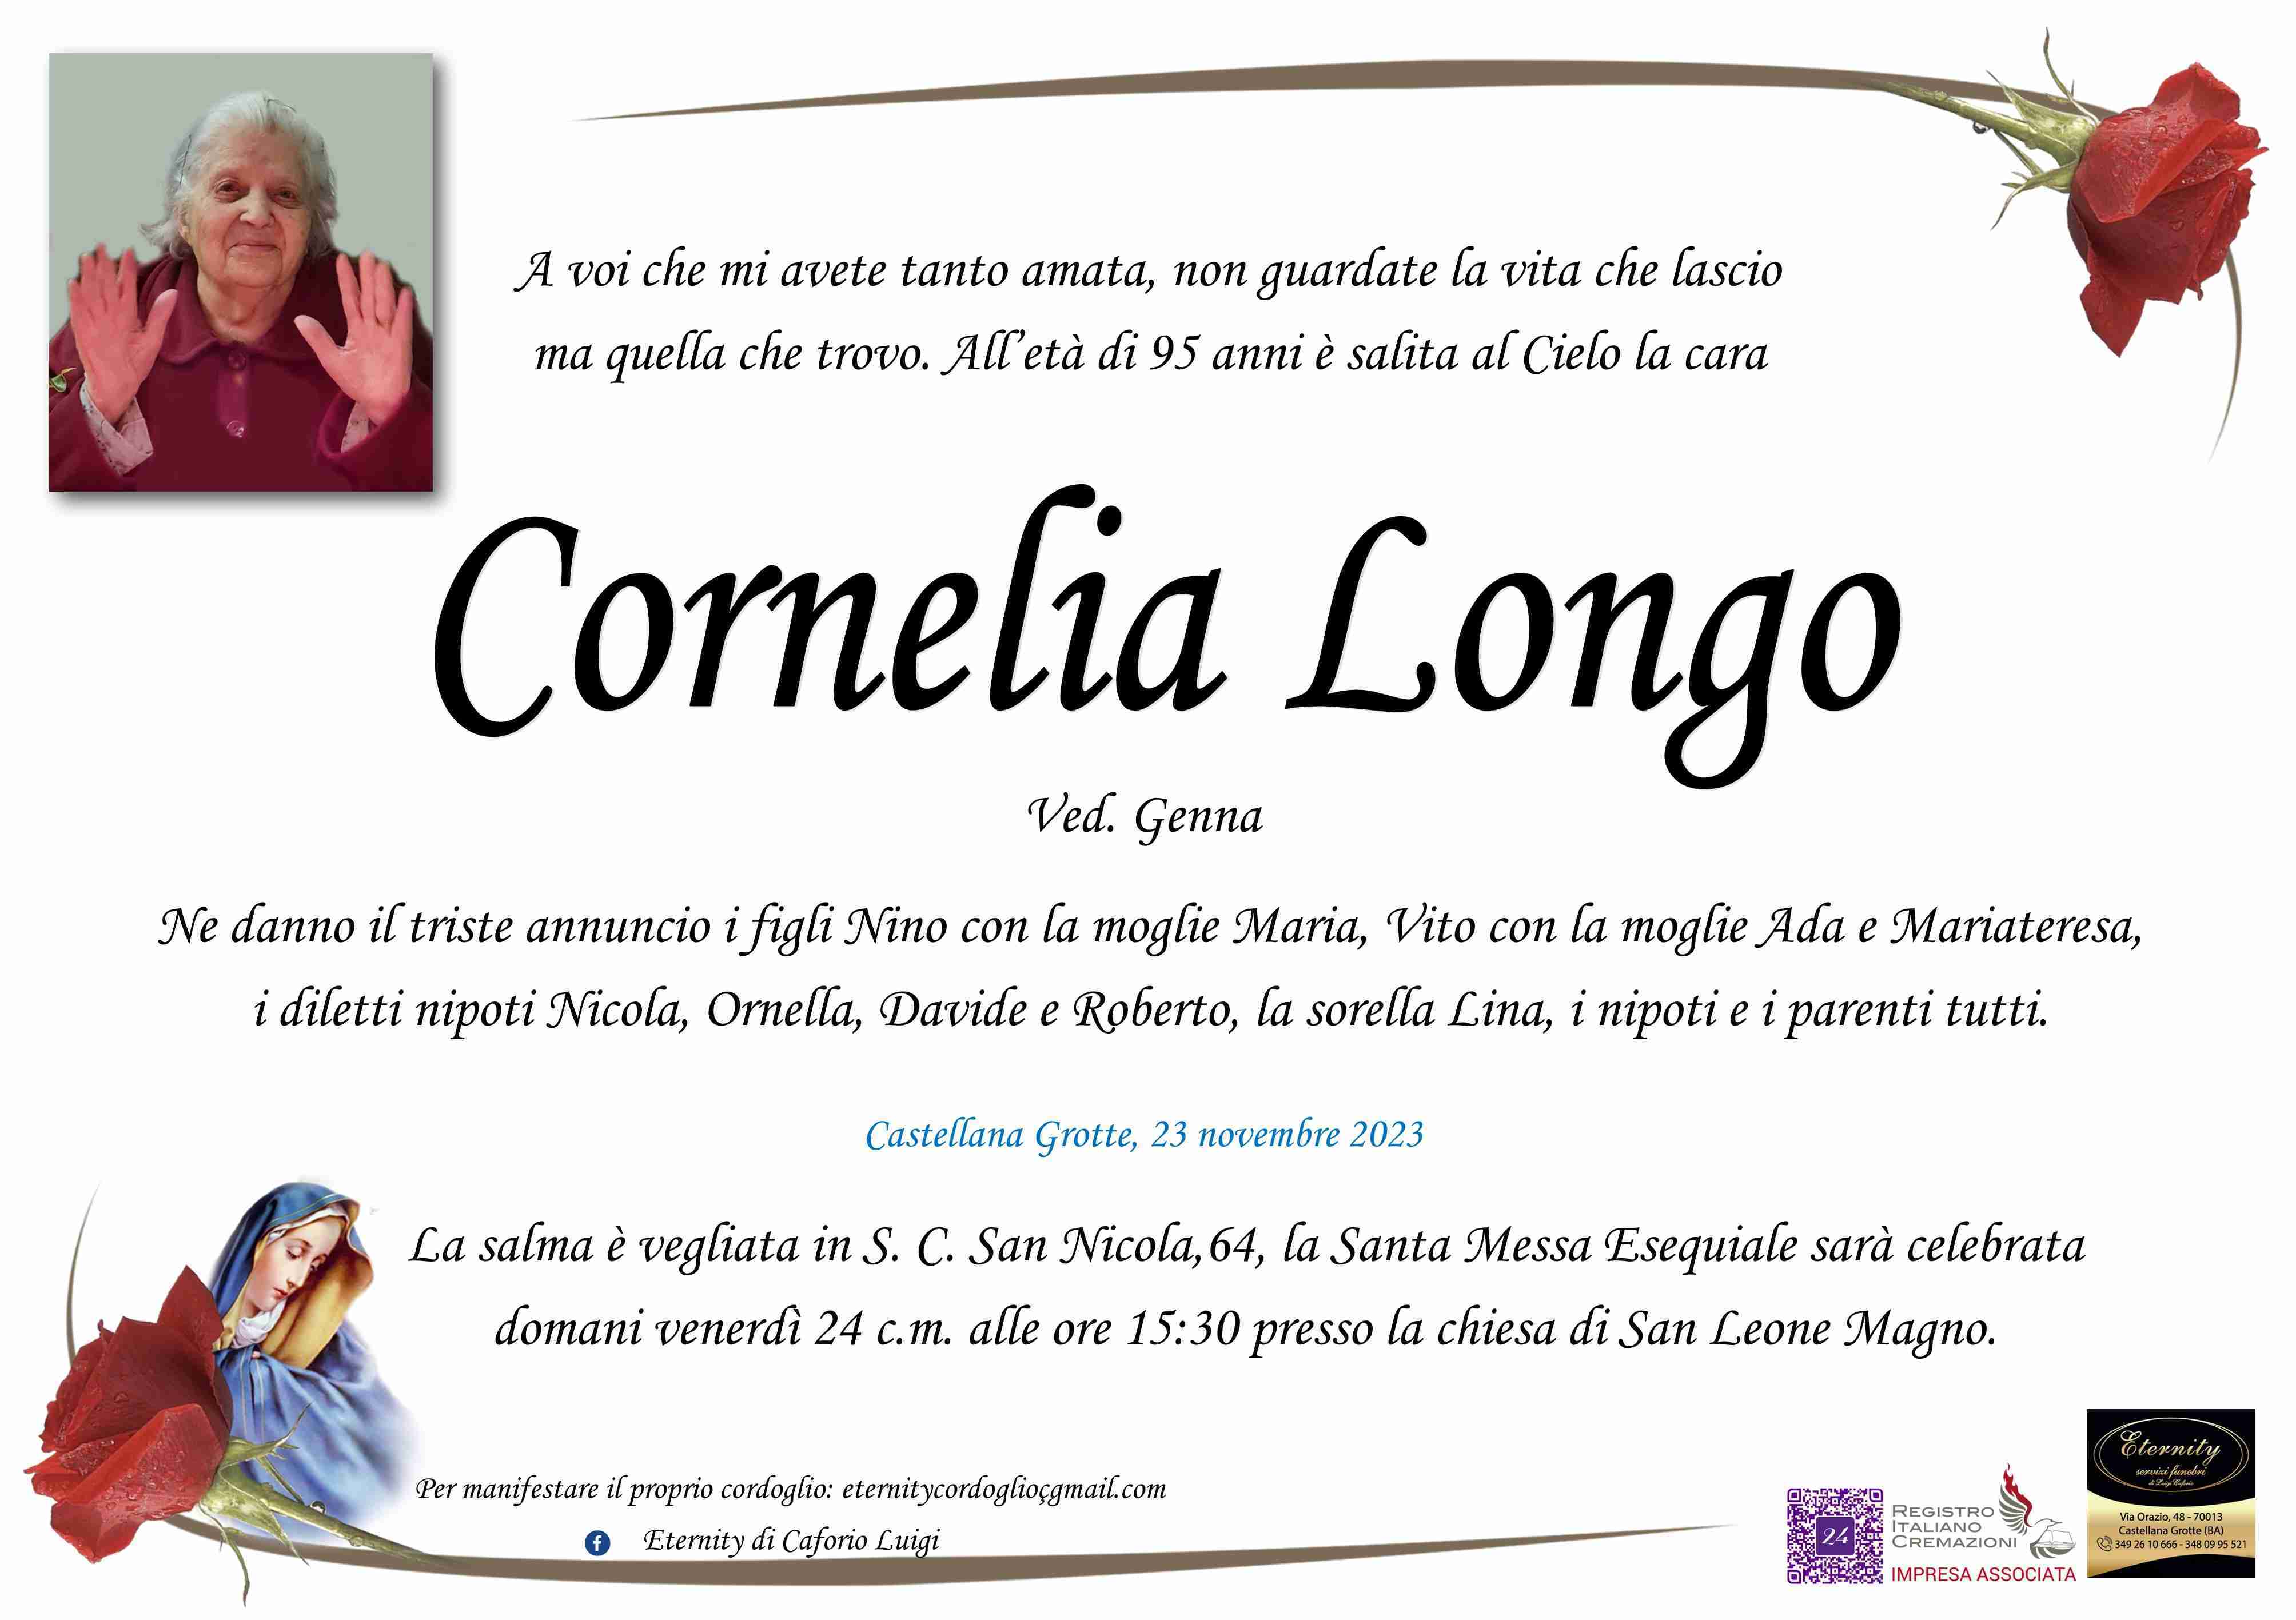 Cornelia Longo